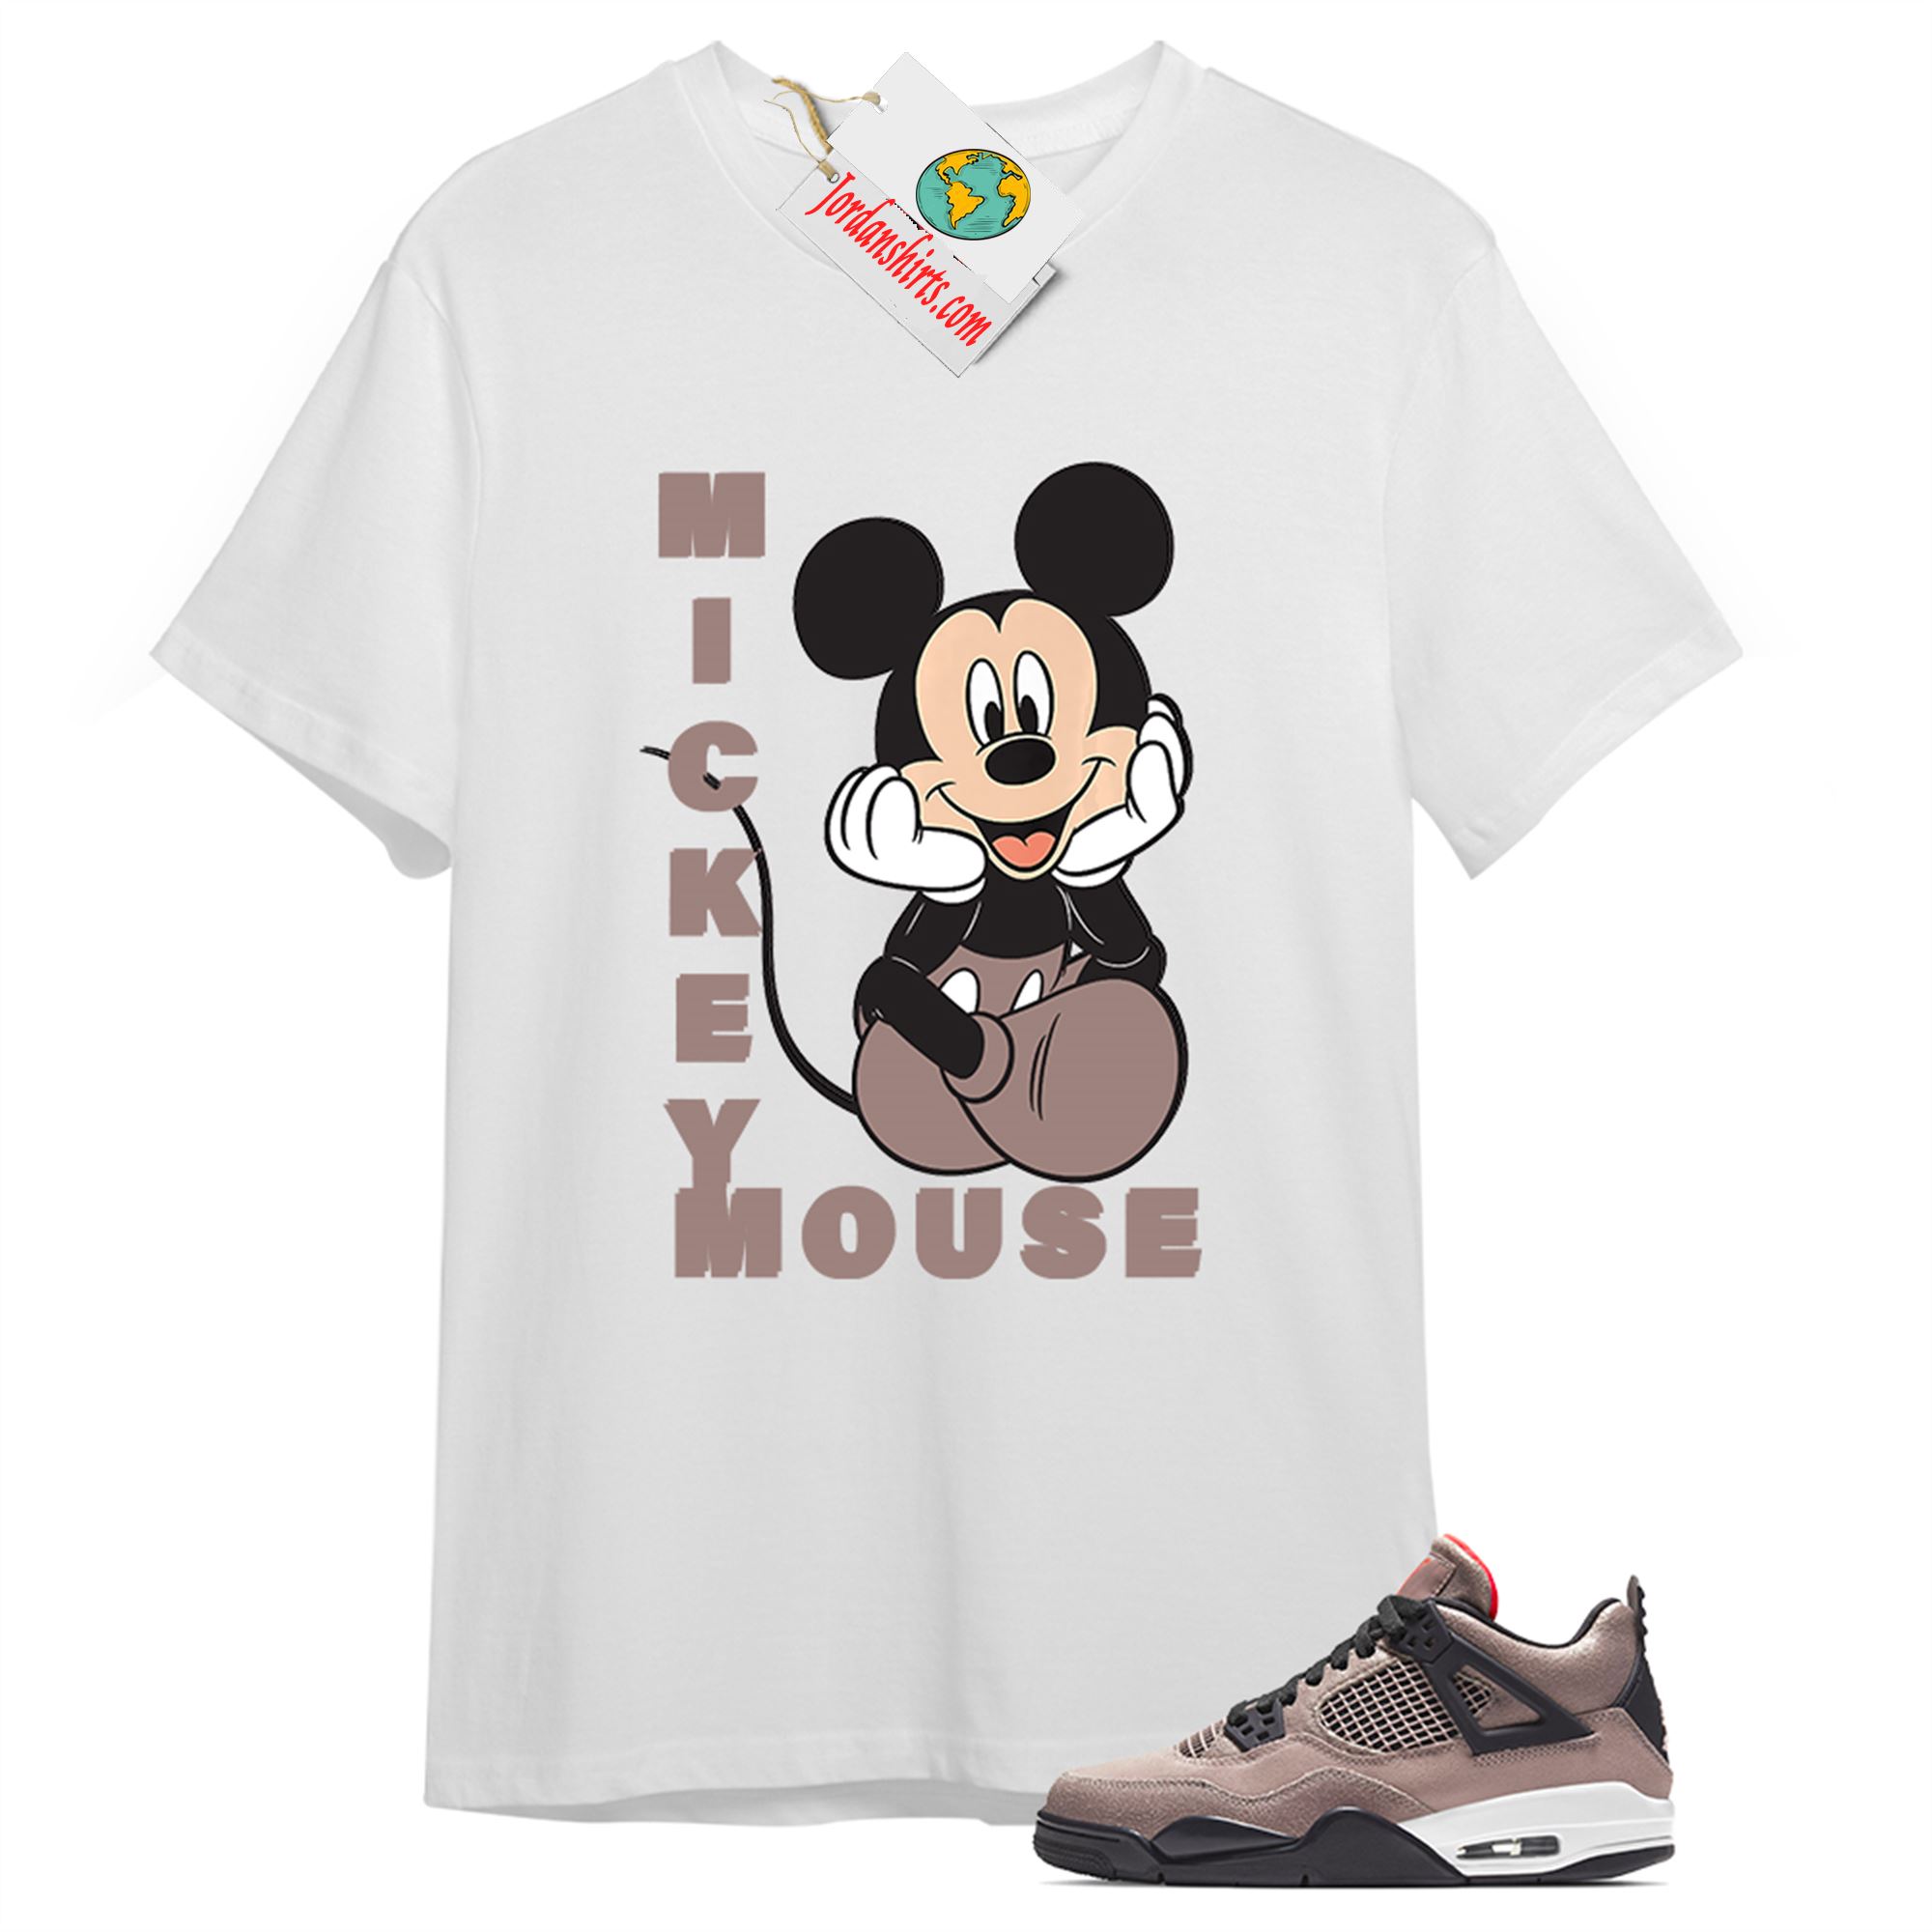 Jordan 4 Shirt, Disney Mickey Mouse Hands In Face White T-shirt Air Jordan 4 Taupe Haze 4s Size Up To 5xl